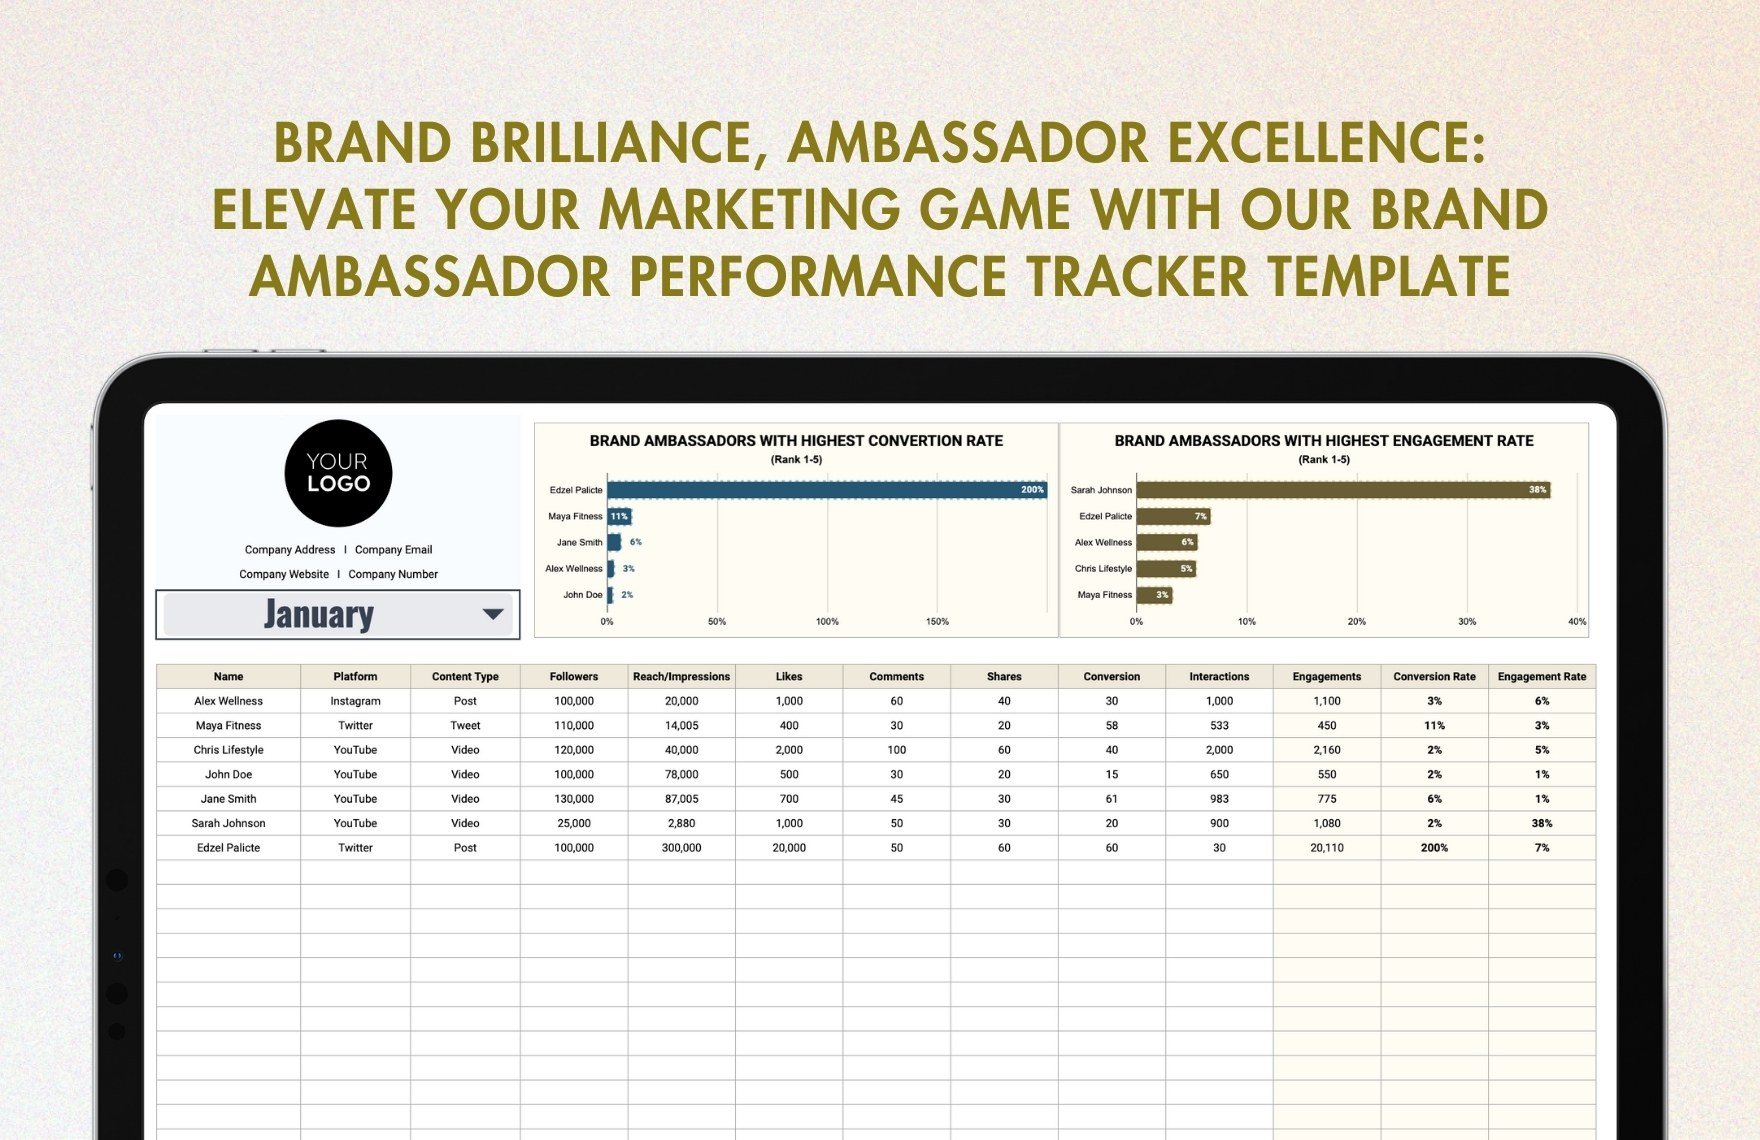 Marketing Brand Ambassador Performance Tracker Template